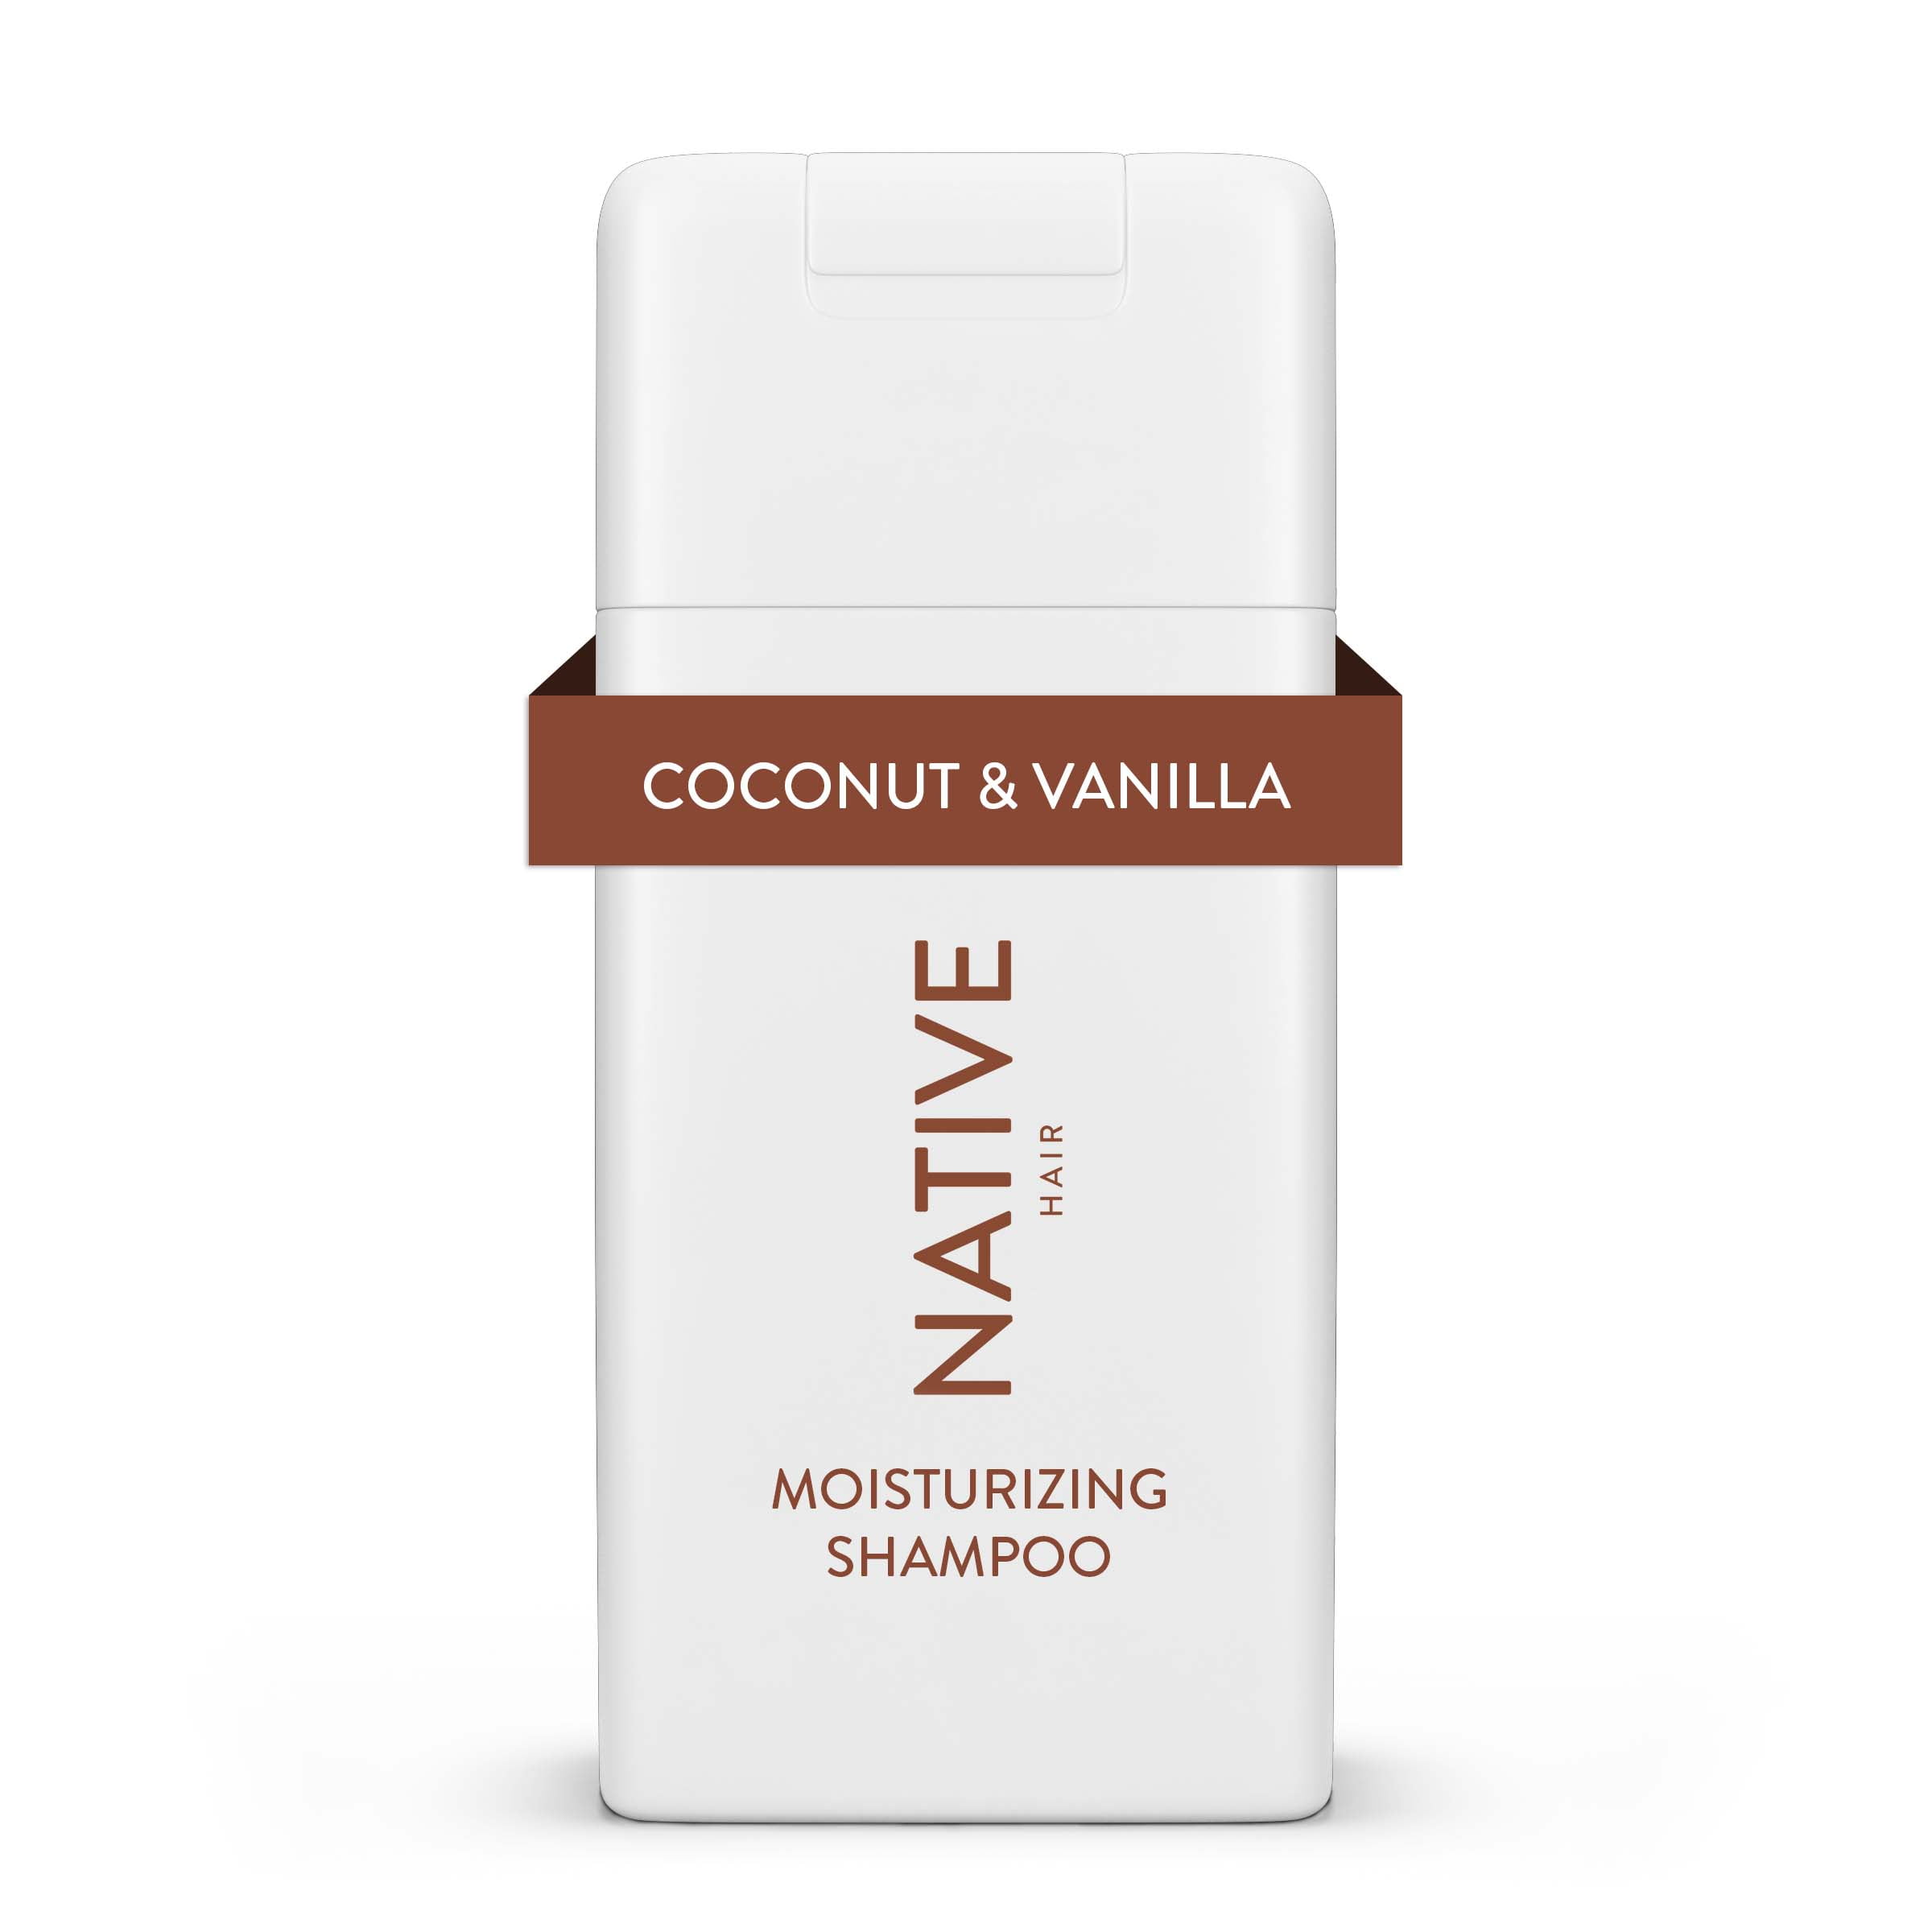 Native Moisturizing Shampoo, Coconut & Vanilla, & Free, Travel-Sized Mini 3 oz - Walmart.com